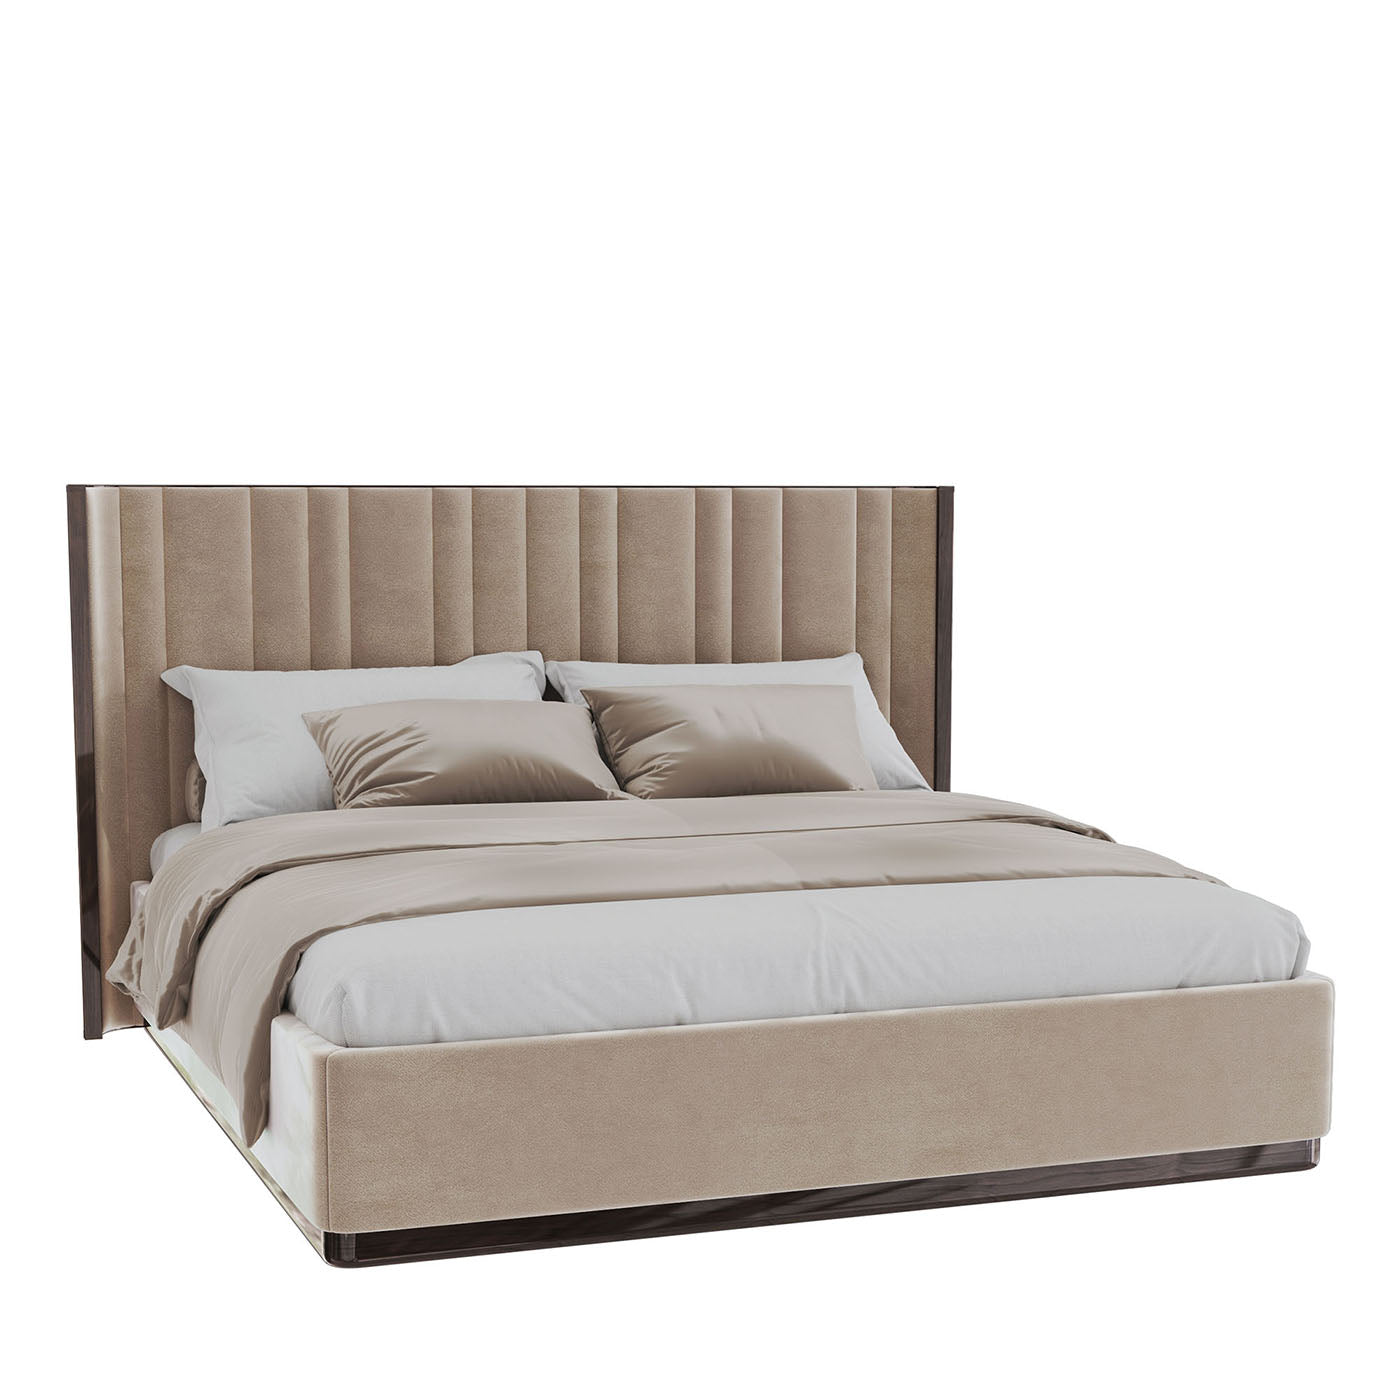  Saga 140 Italian Curved Bed Upholstered In Velvet Fabric - Main view